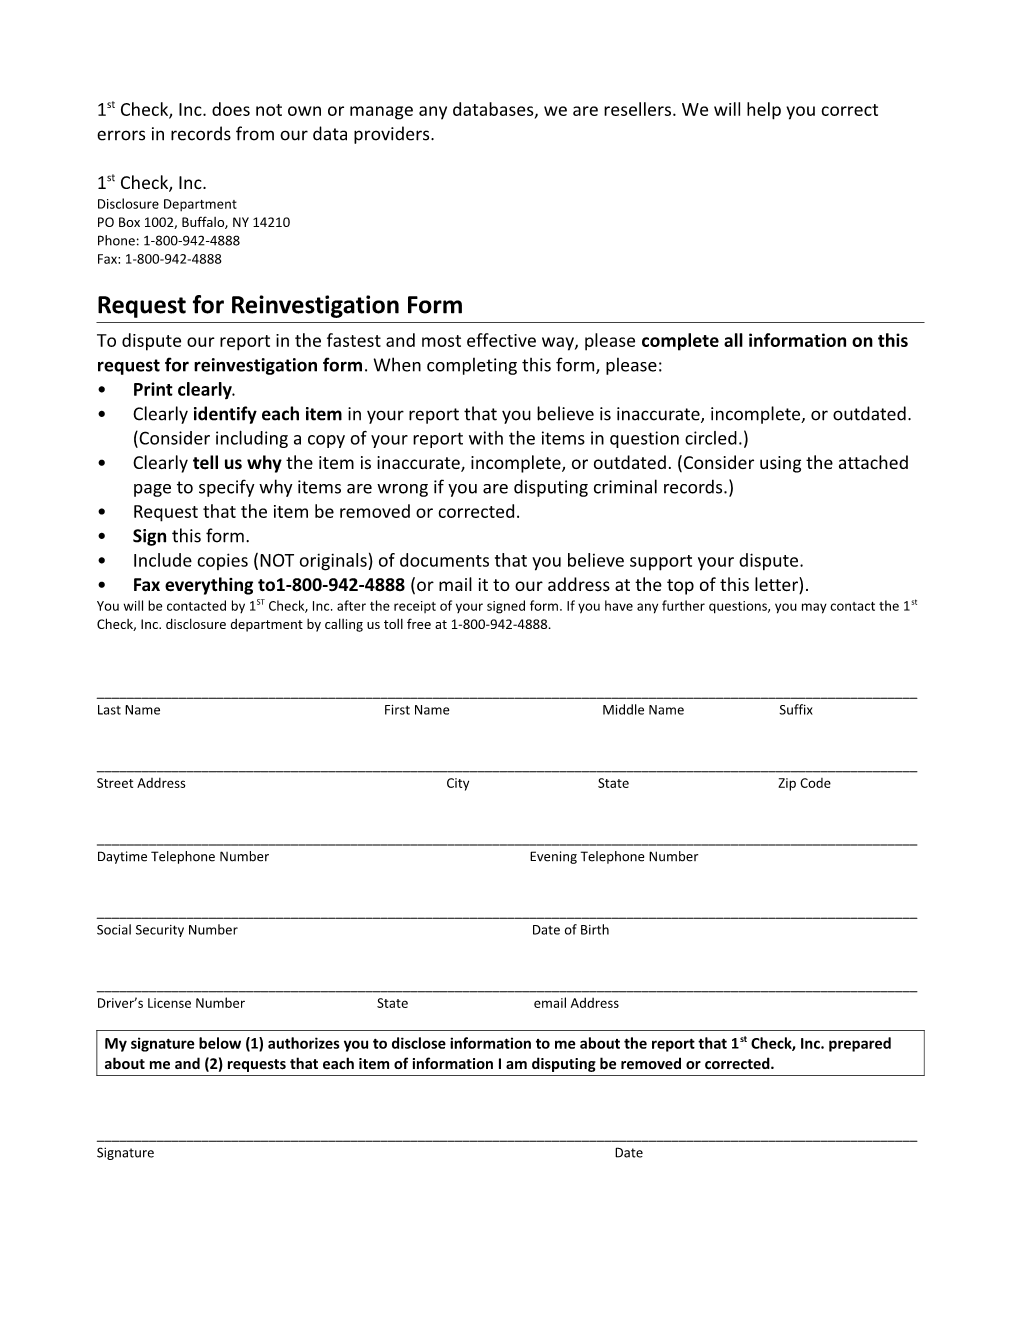 Request for Reinvestigation Form